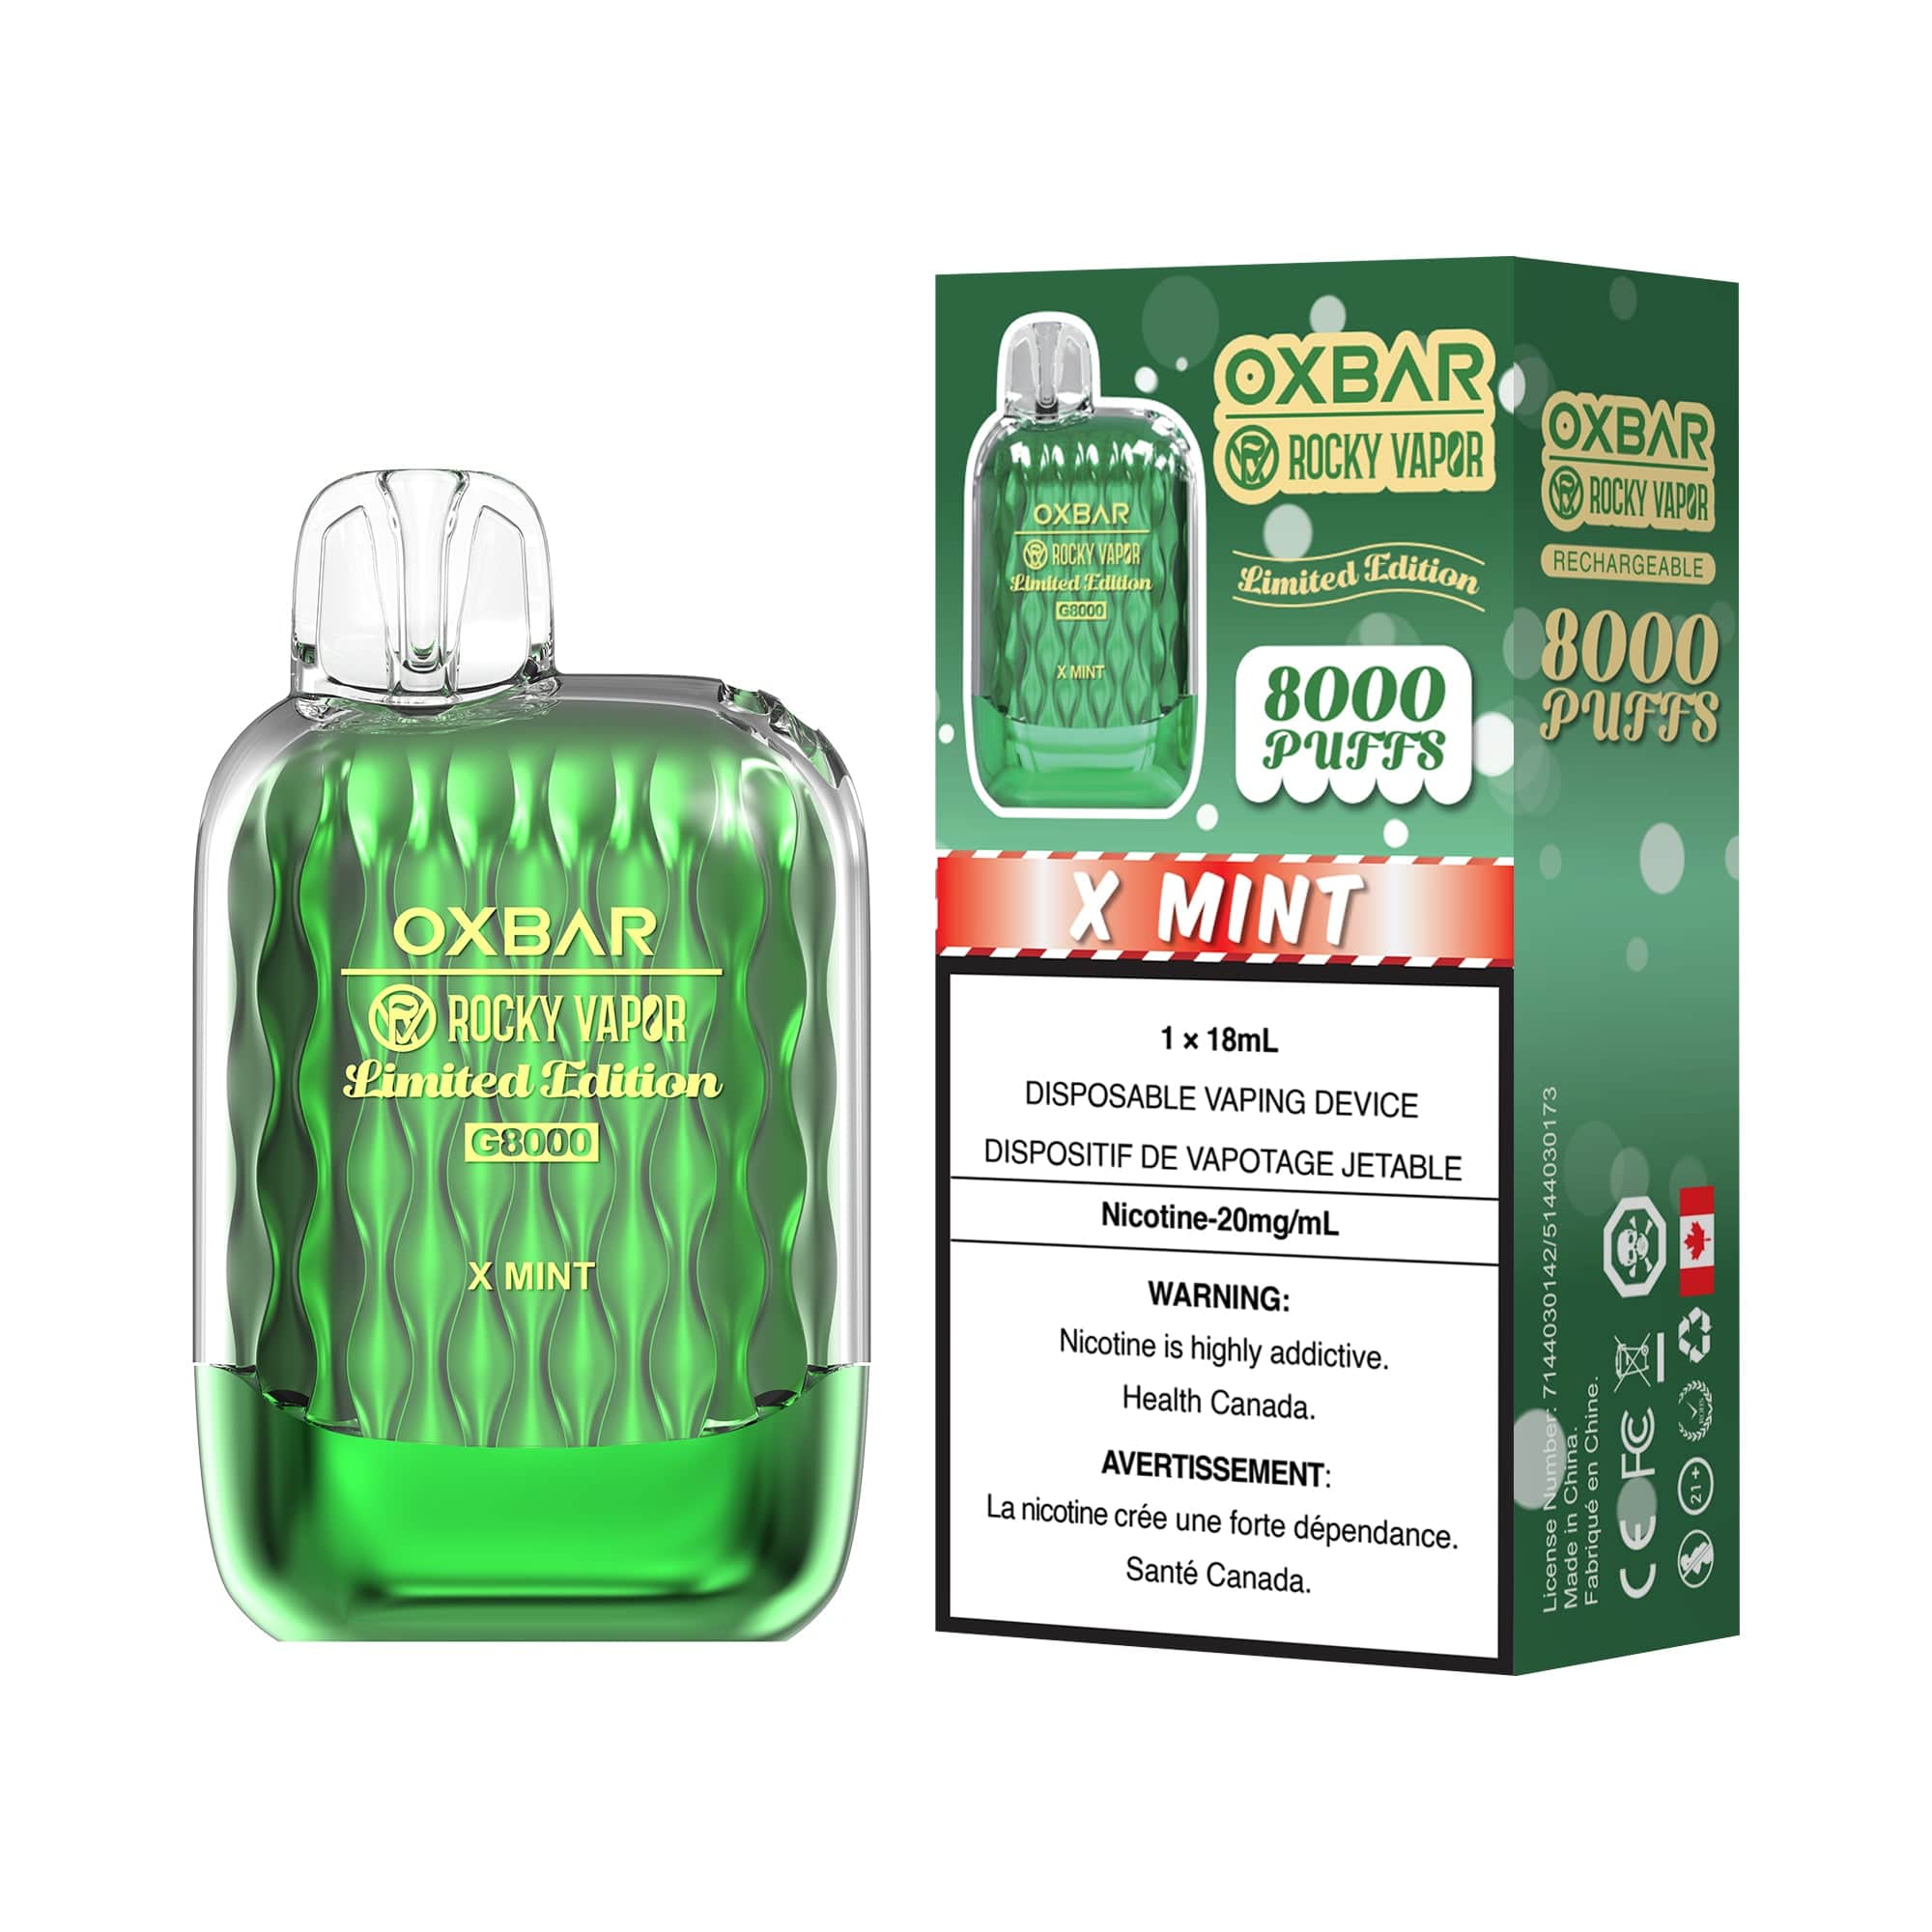 OXBAR x Rocky Vapor G8000 - X Mint Disposable Vape available on Canada online vape shop